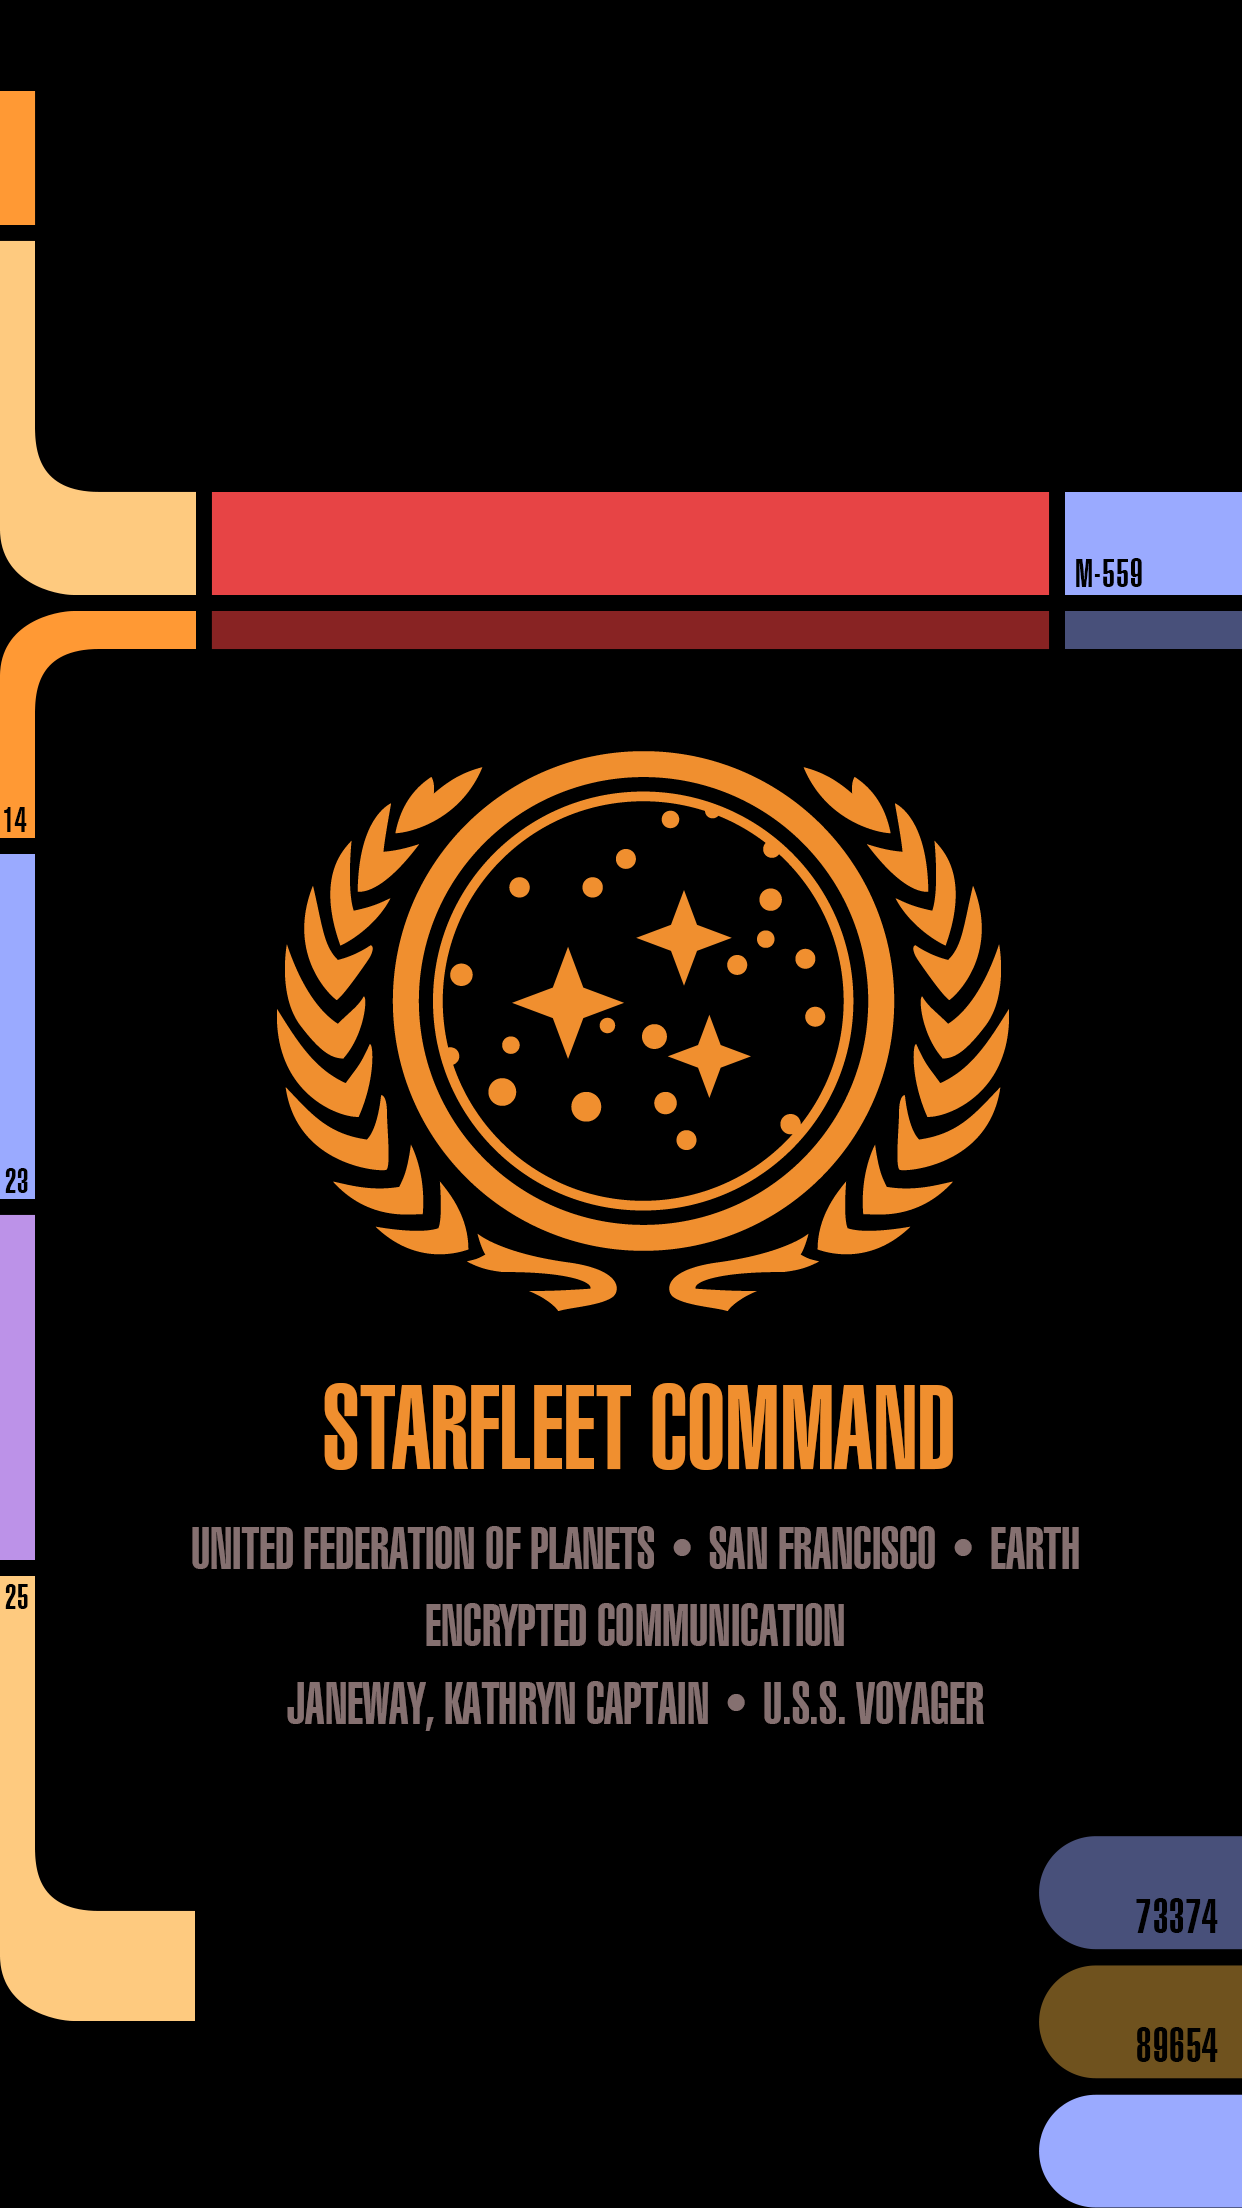 Star Trek Iphone Wallpaper